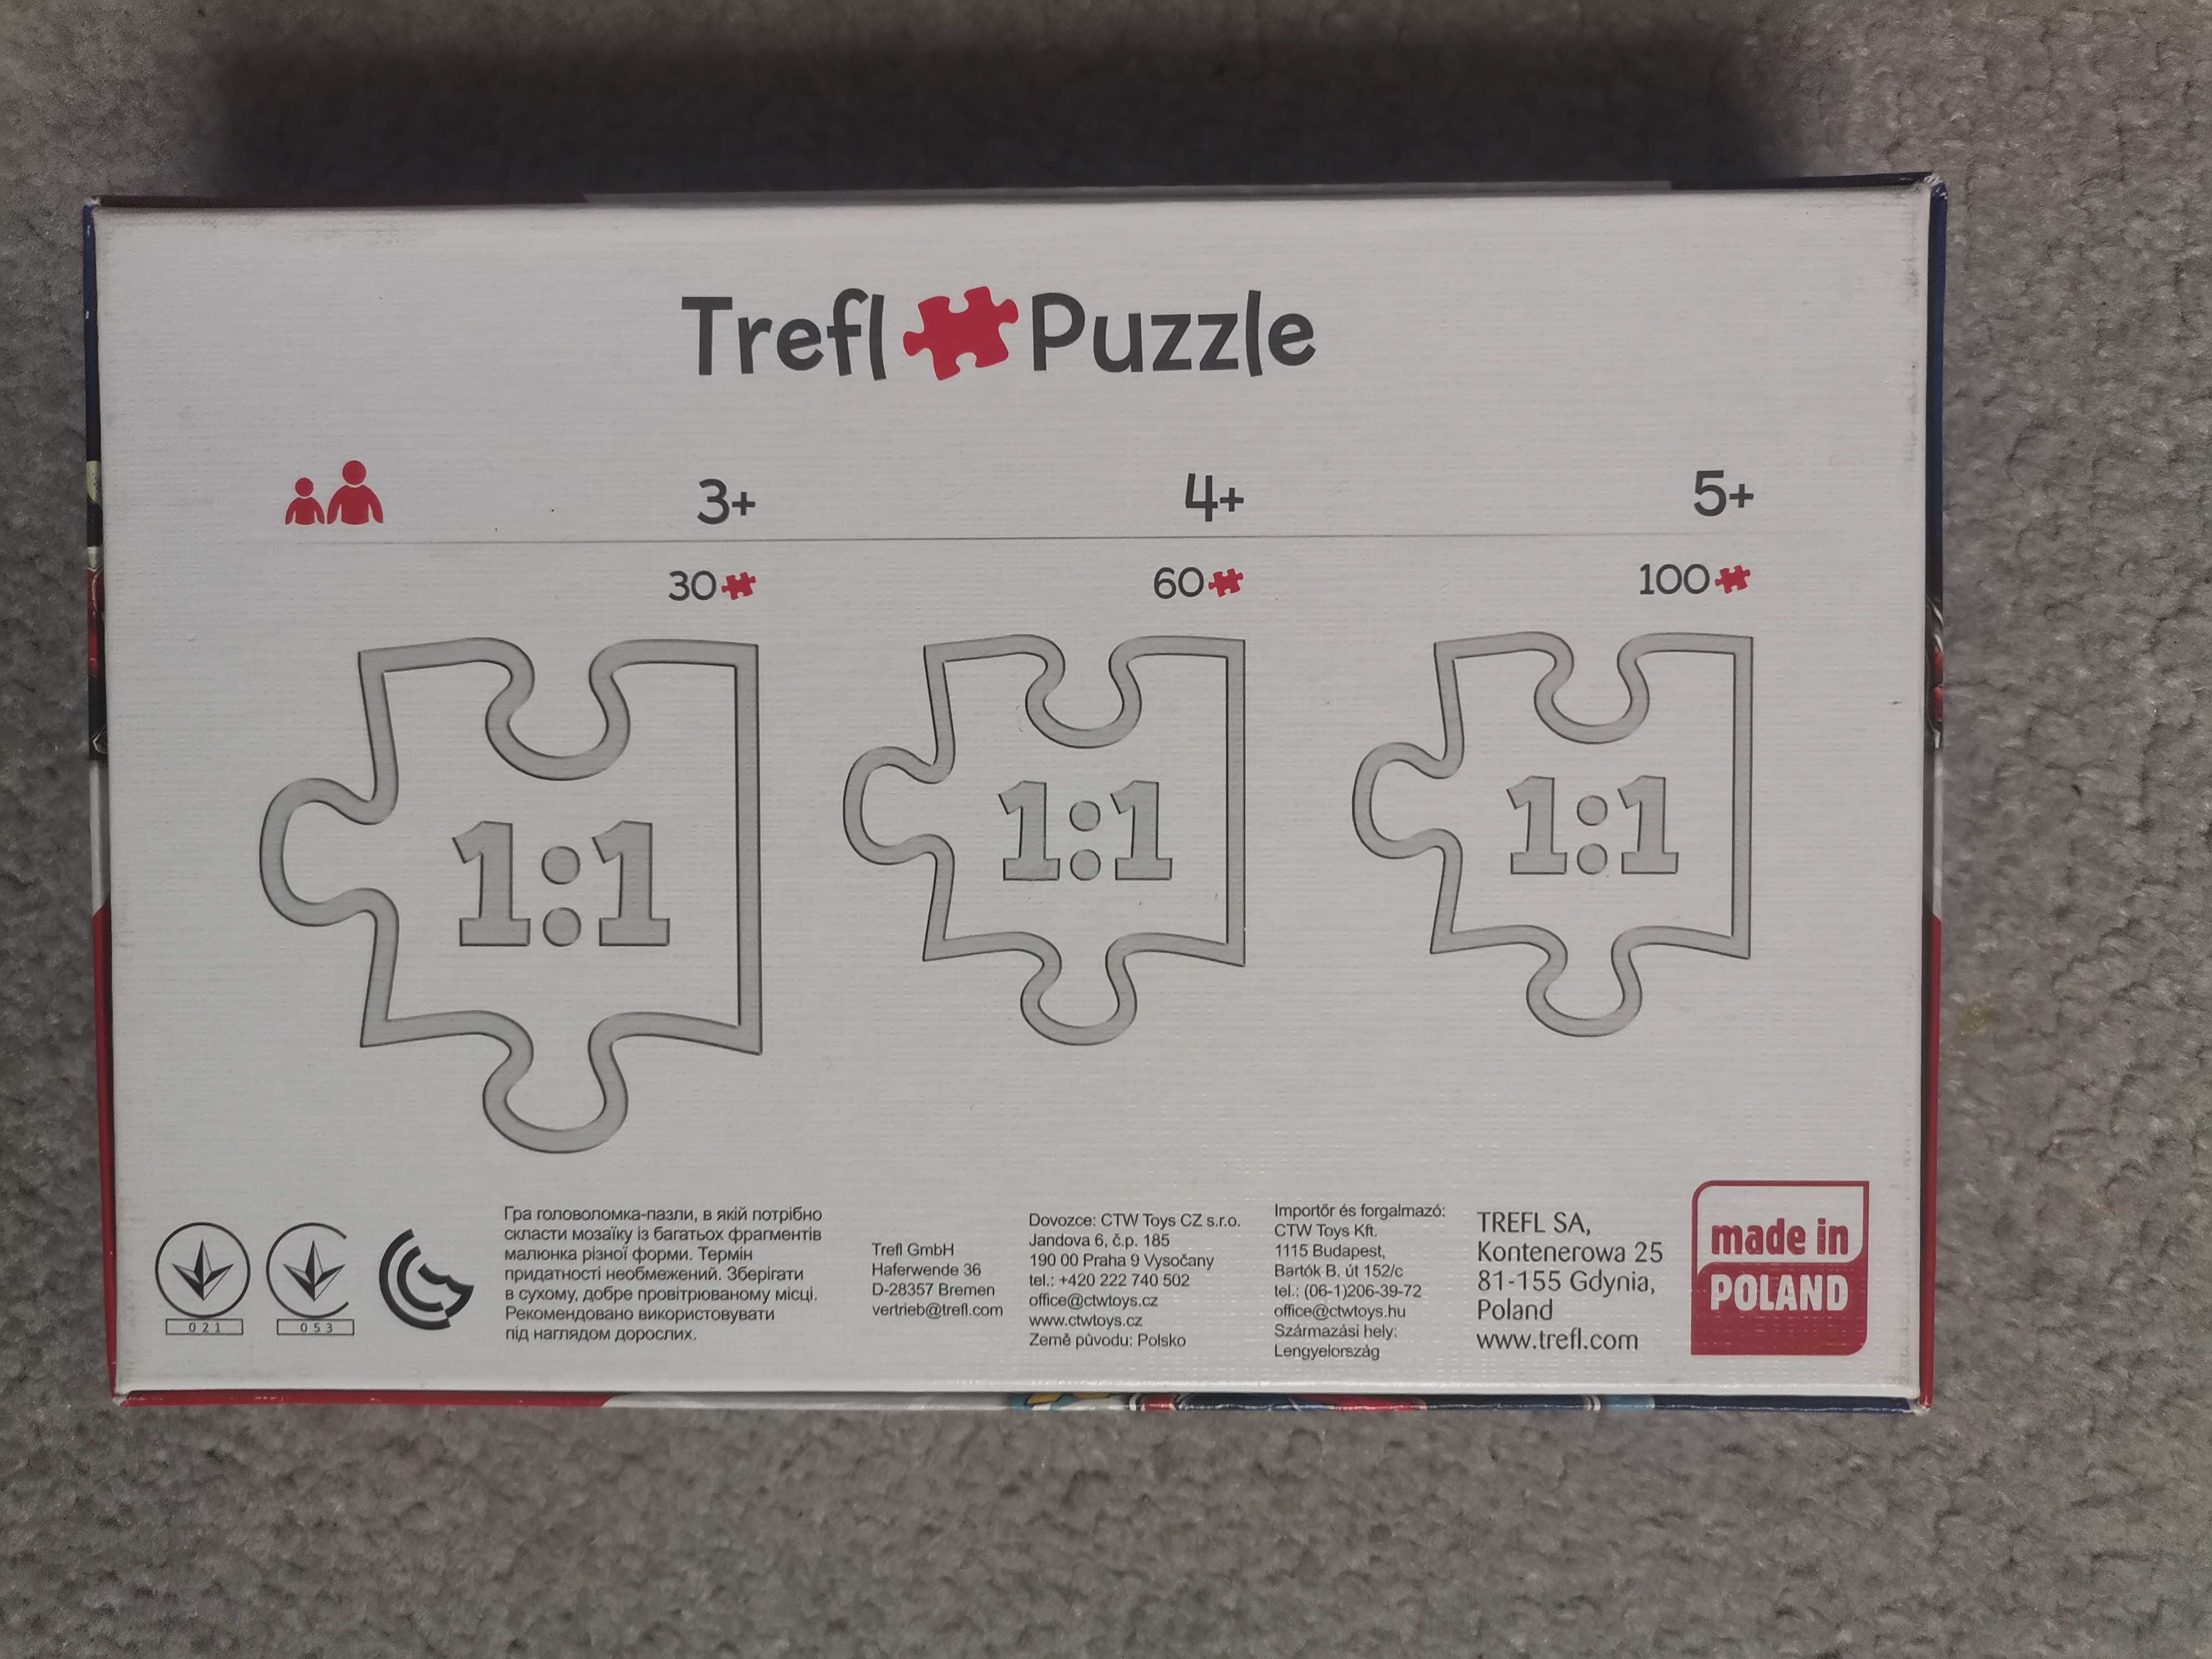 Puzzle Trefl Spiderman 60 sztuk